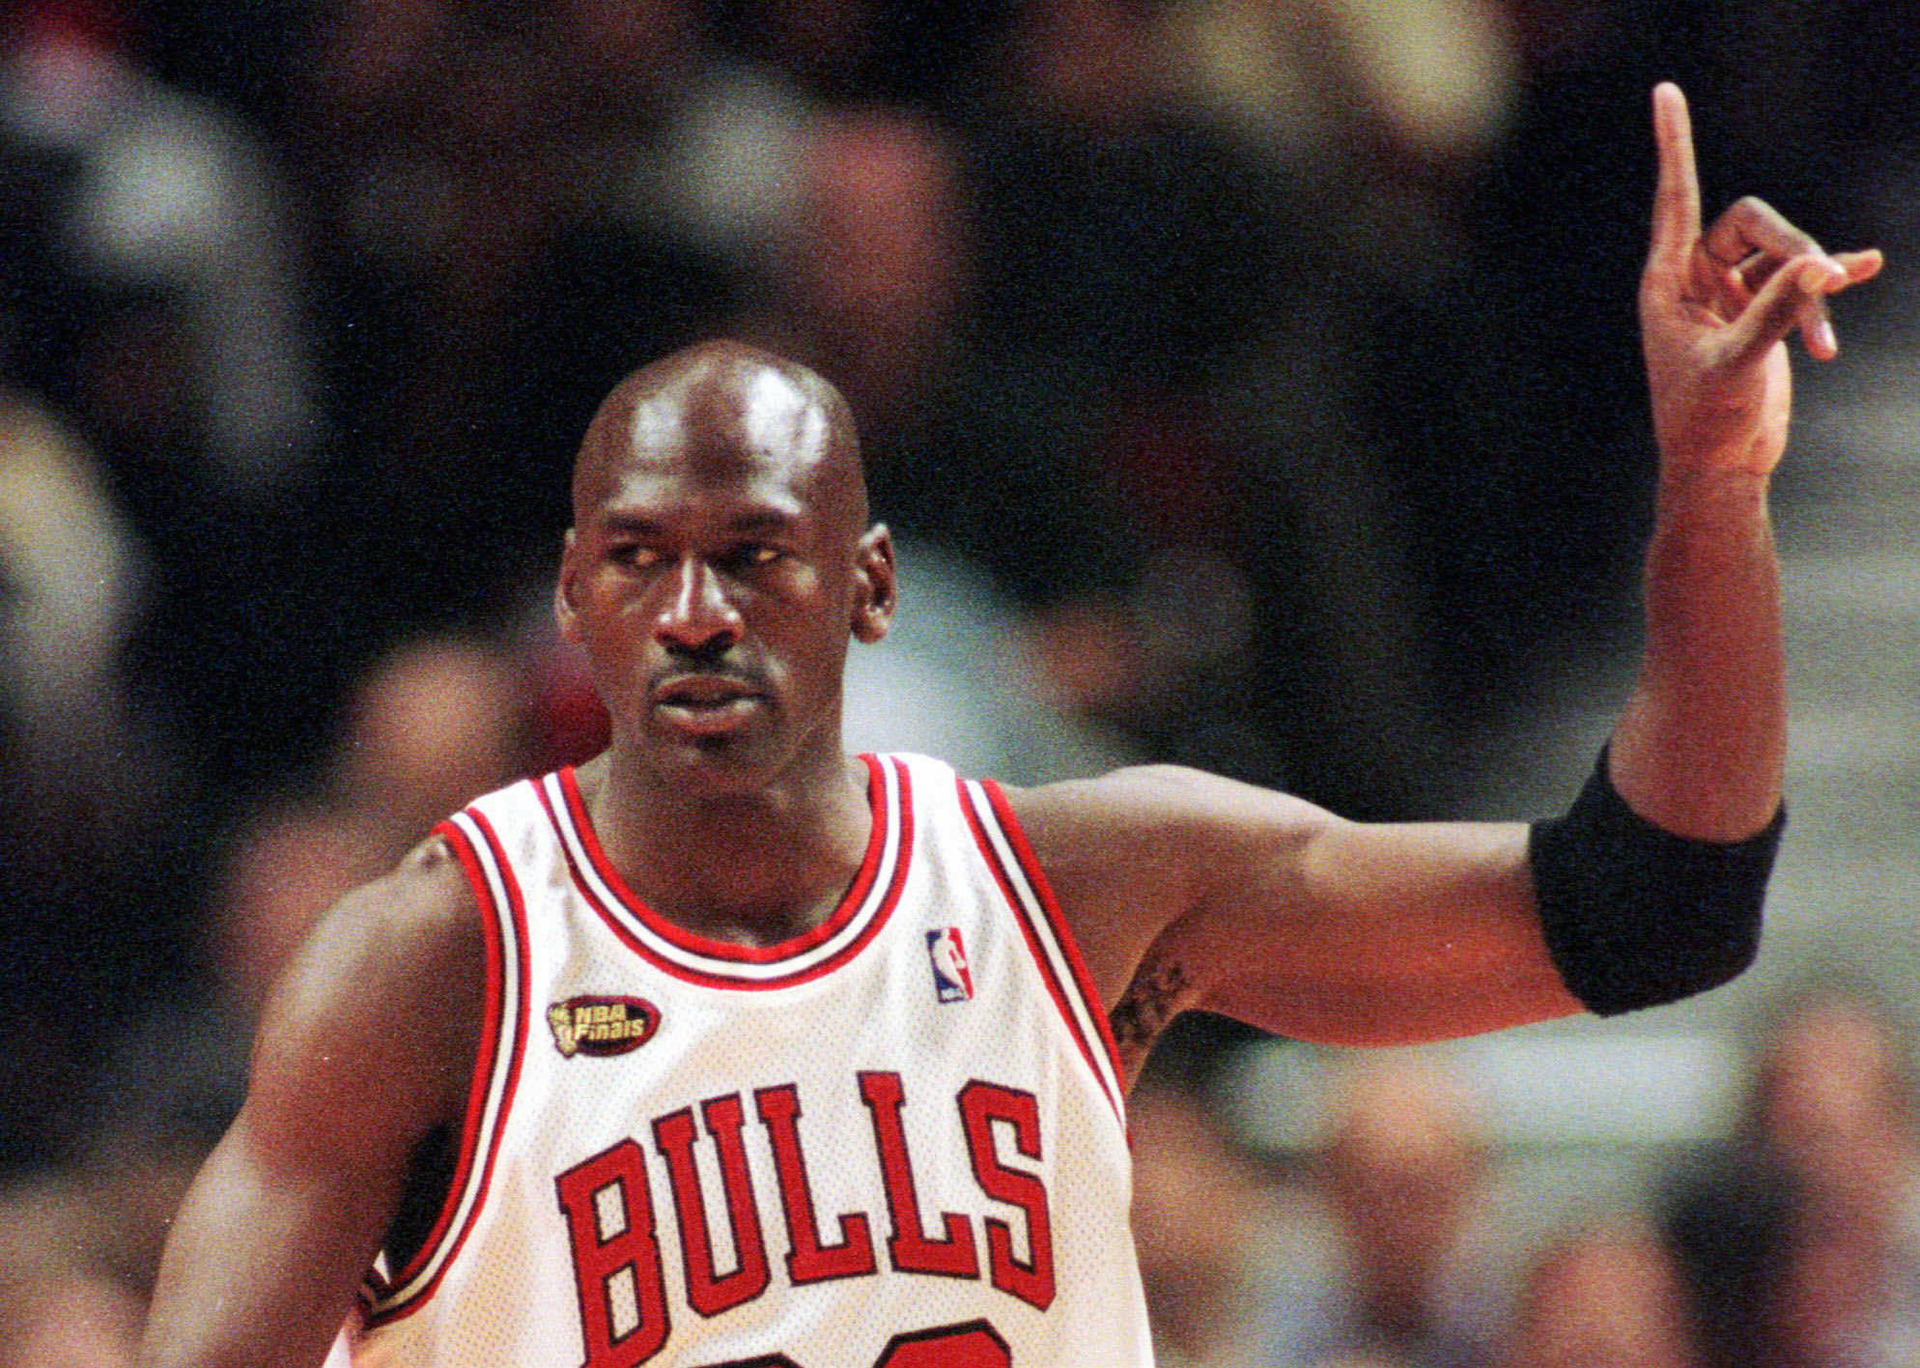 In photos: Michael Jordan's 'Last Dance' jersey and